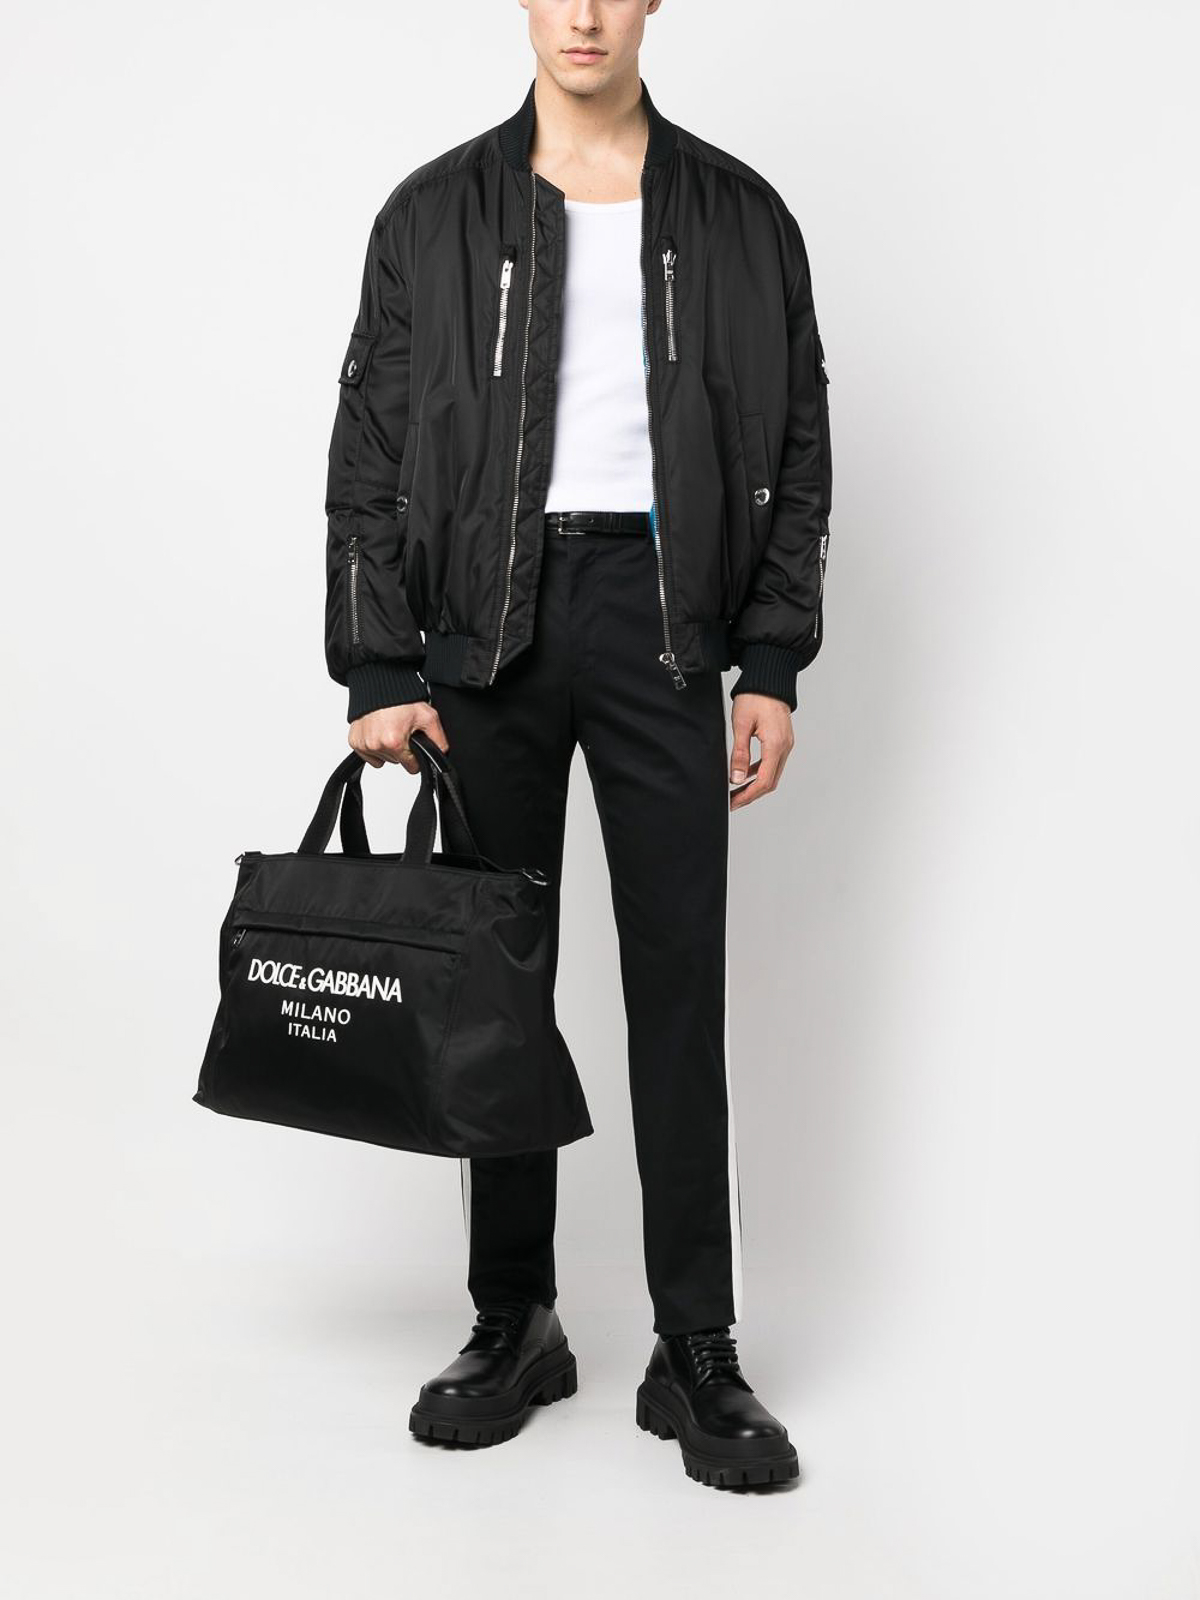 Shop Dolce & Gabbana Shopping Bag In Negro